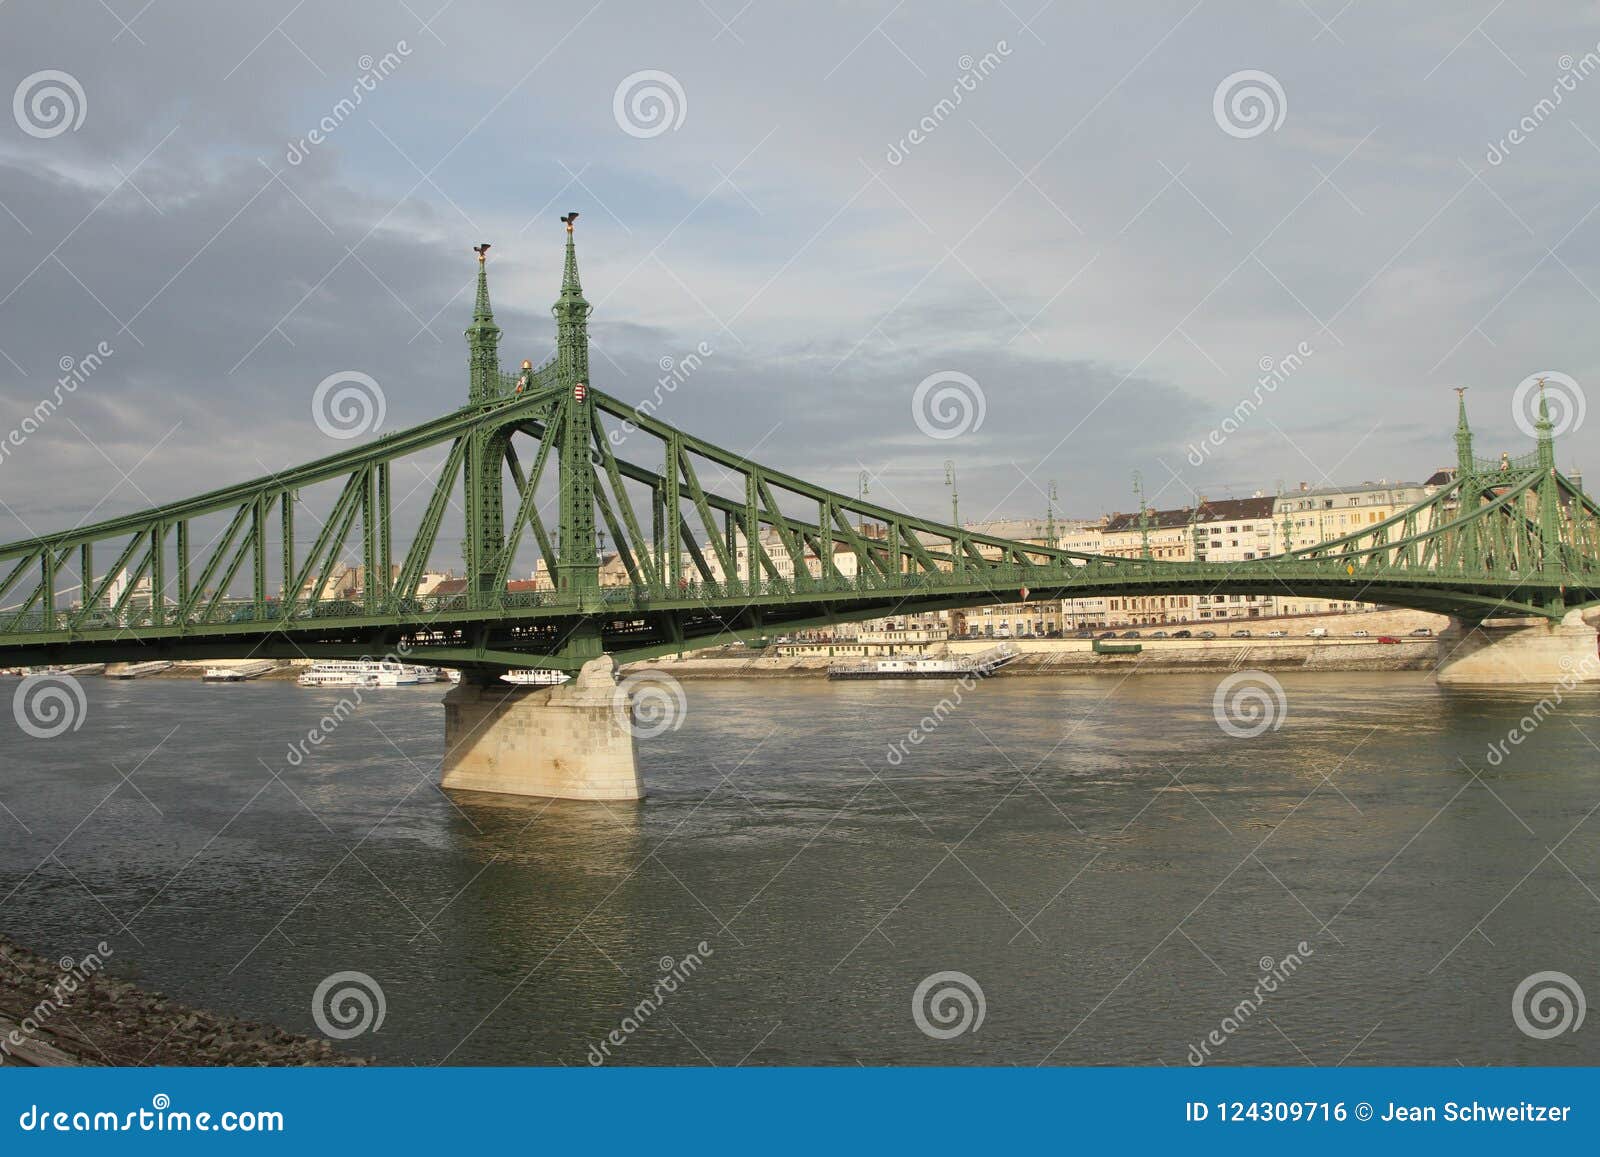 liberty bridge in budapest hungary